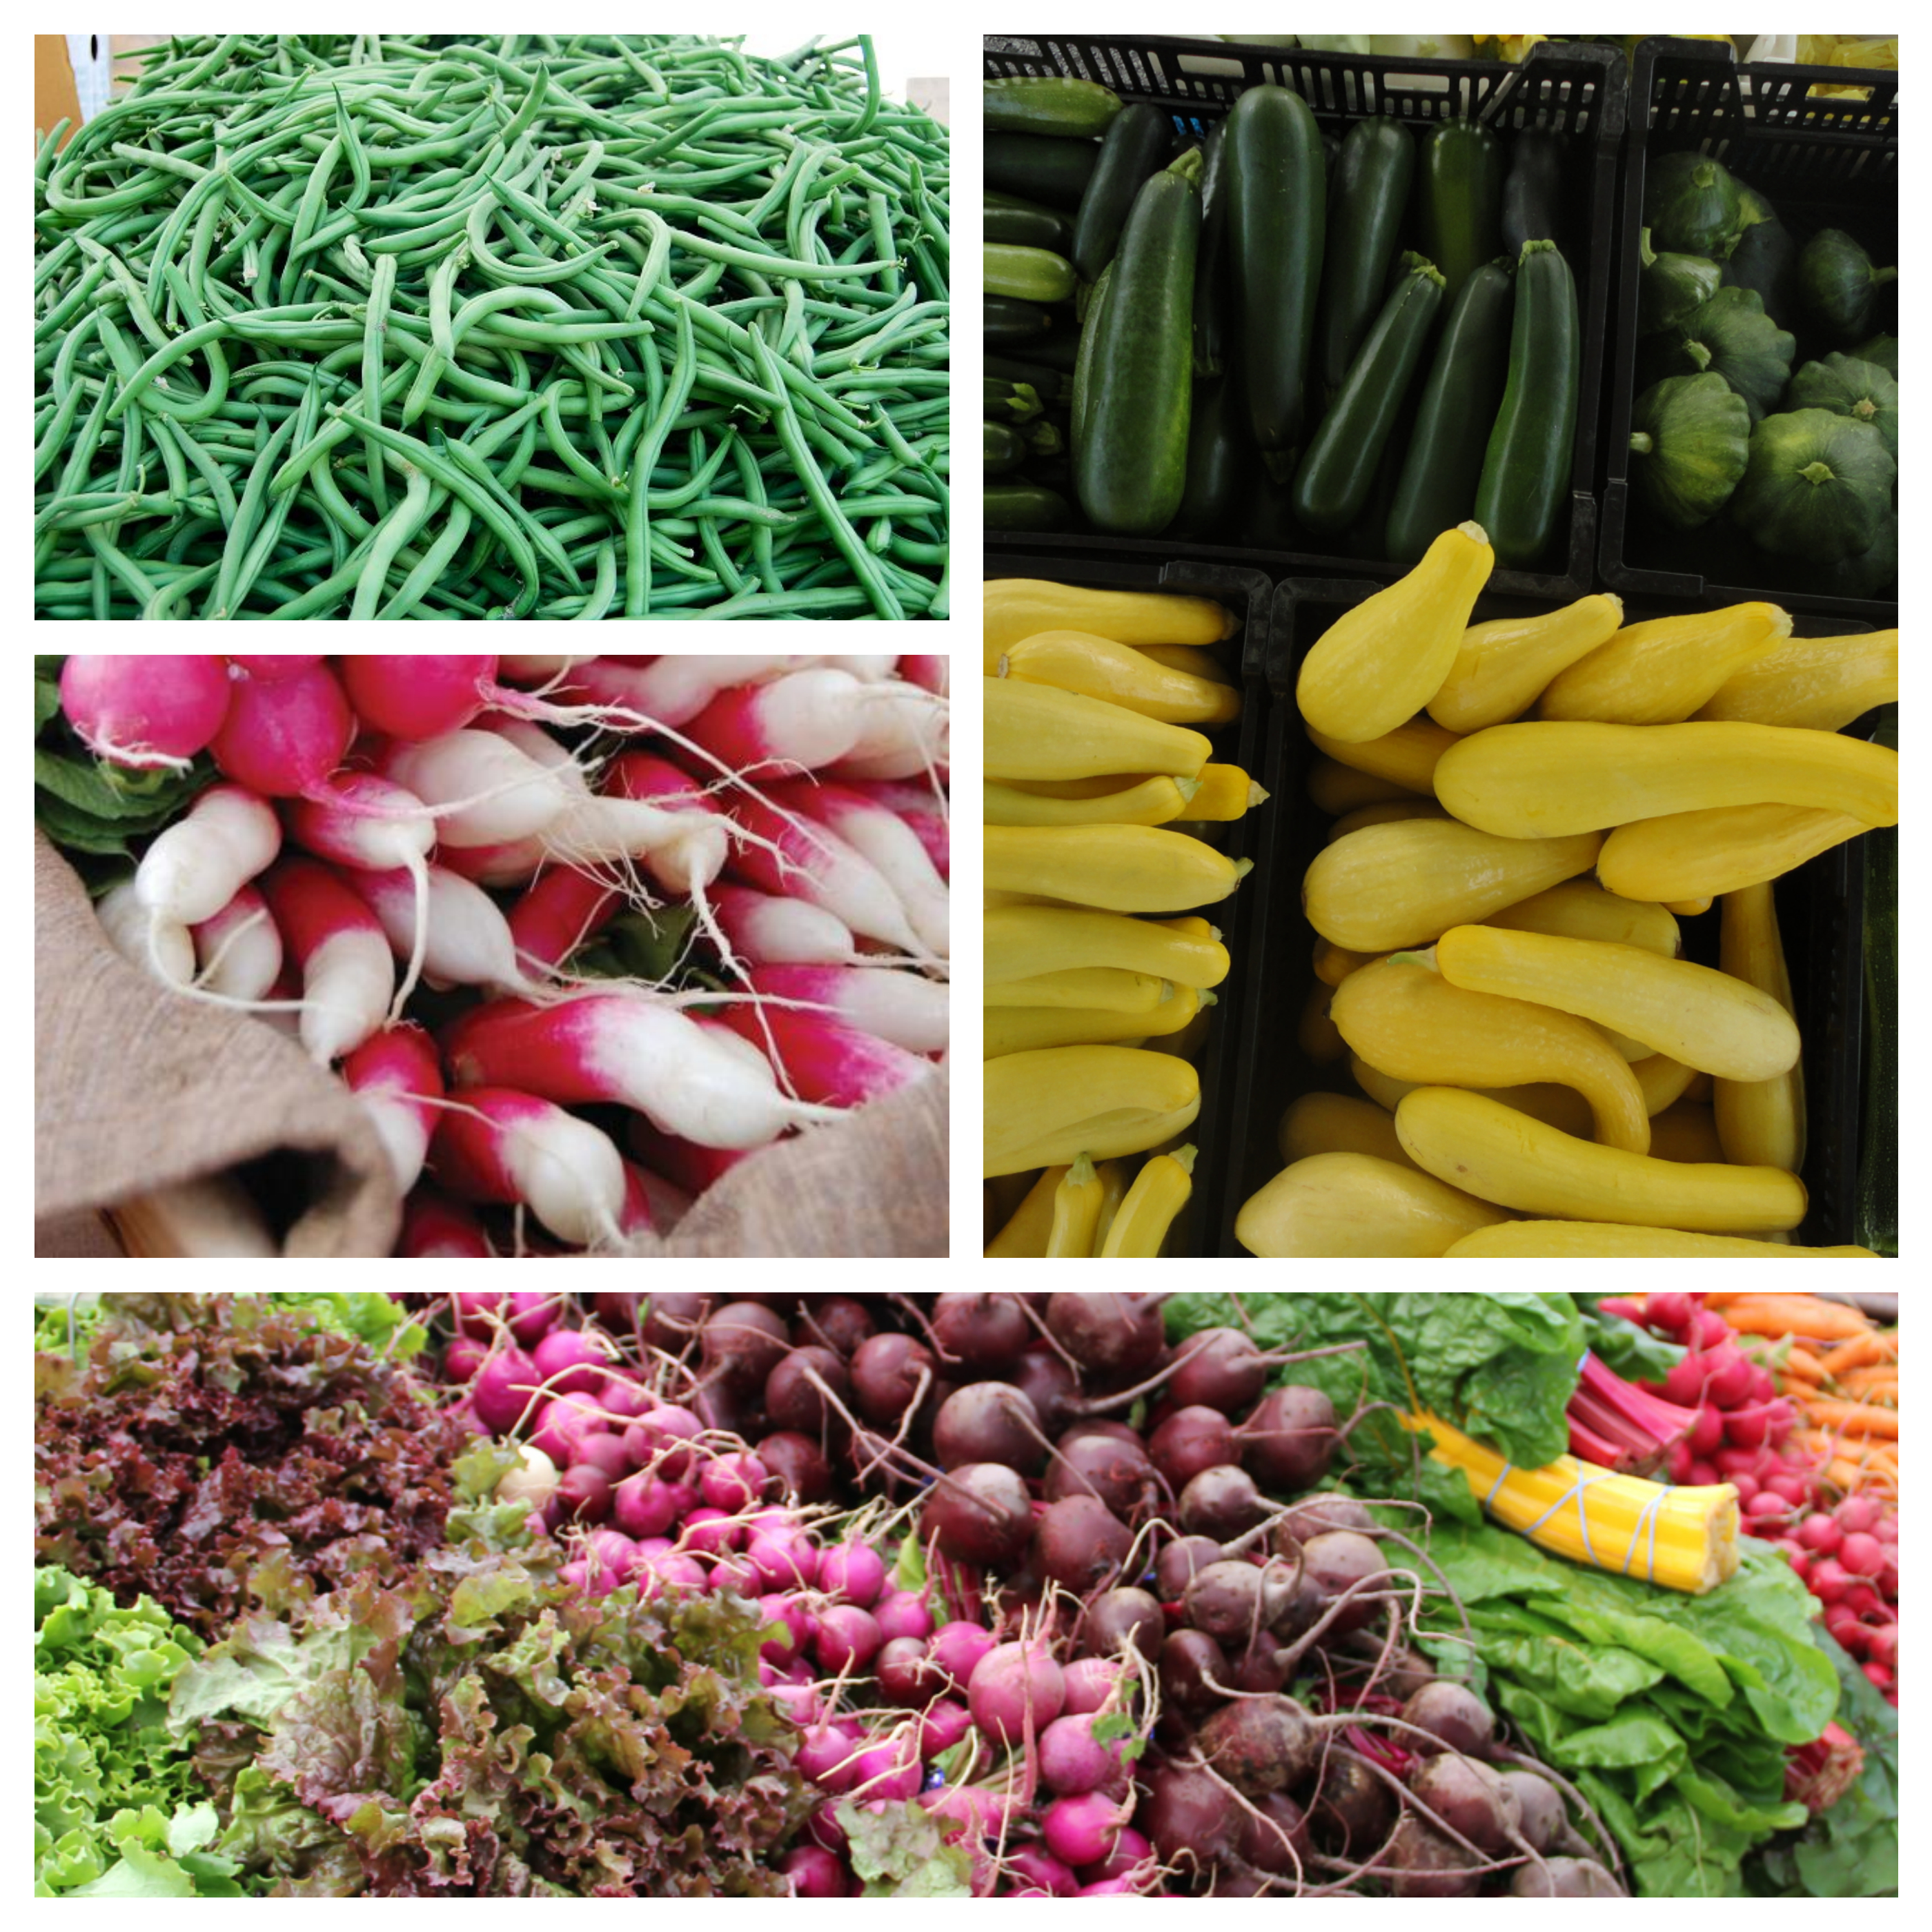 farmers-market-greenbeans_640x428_Fotor_Collage